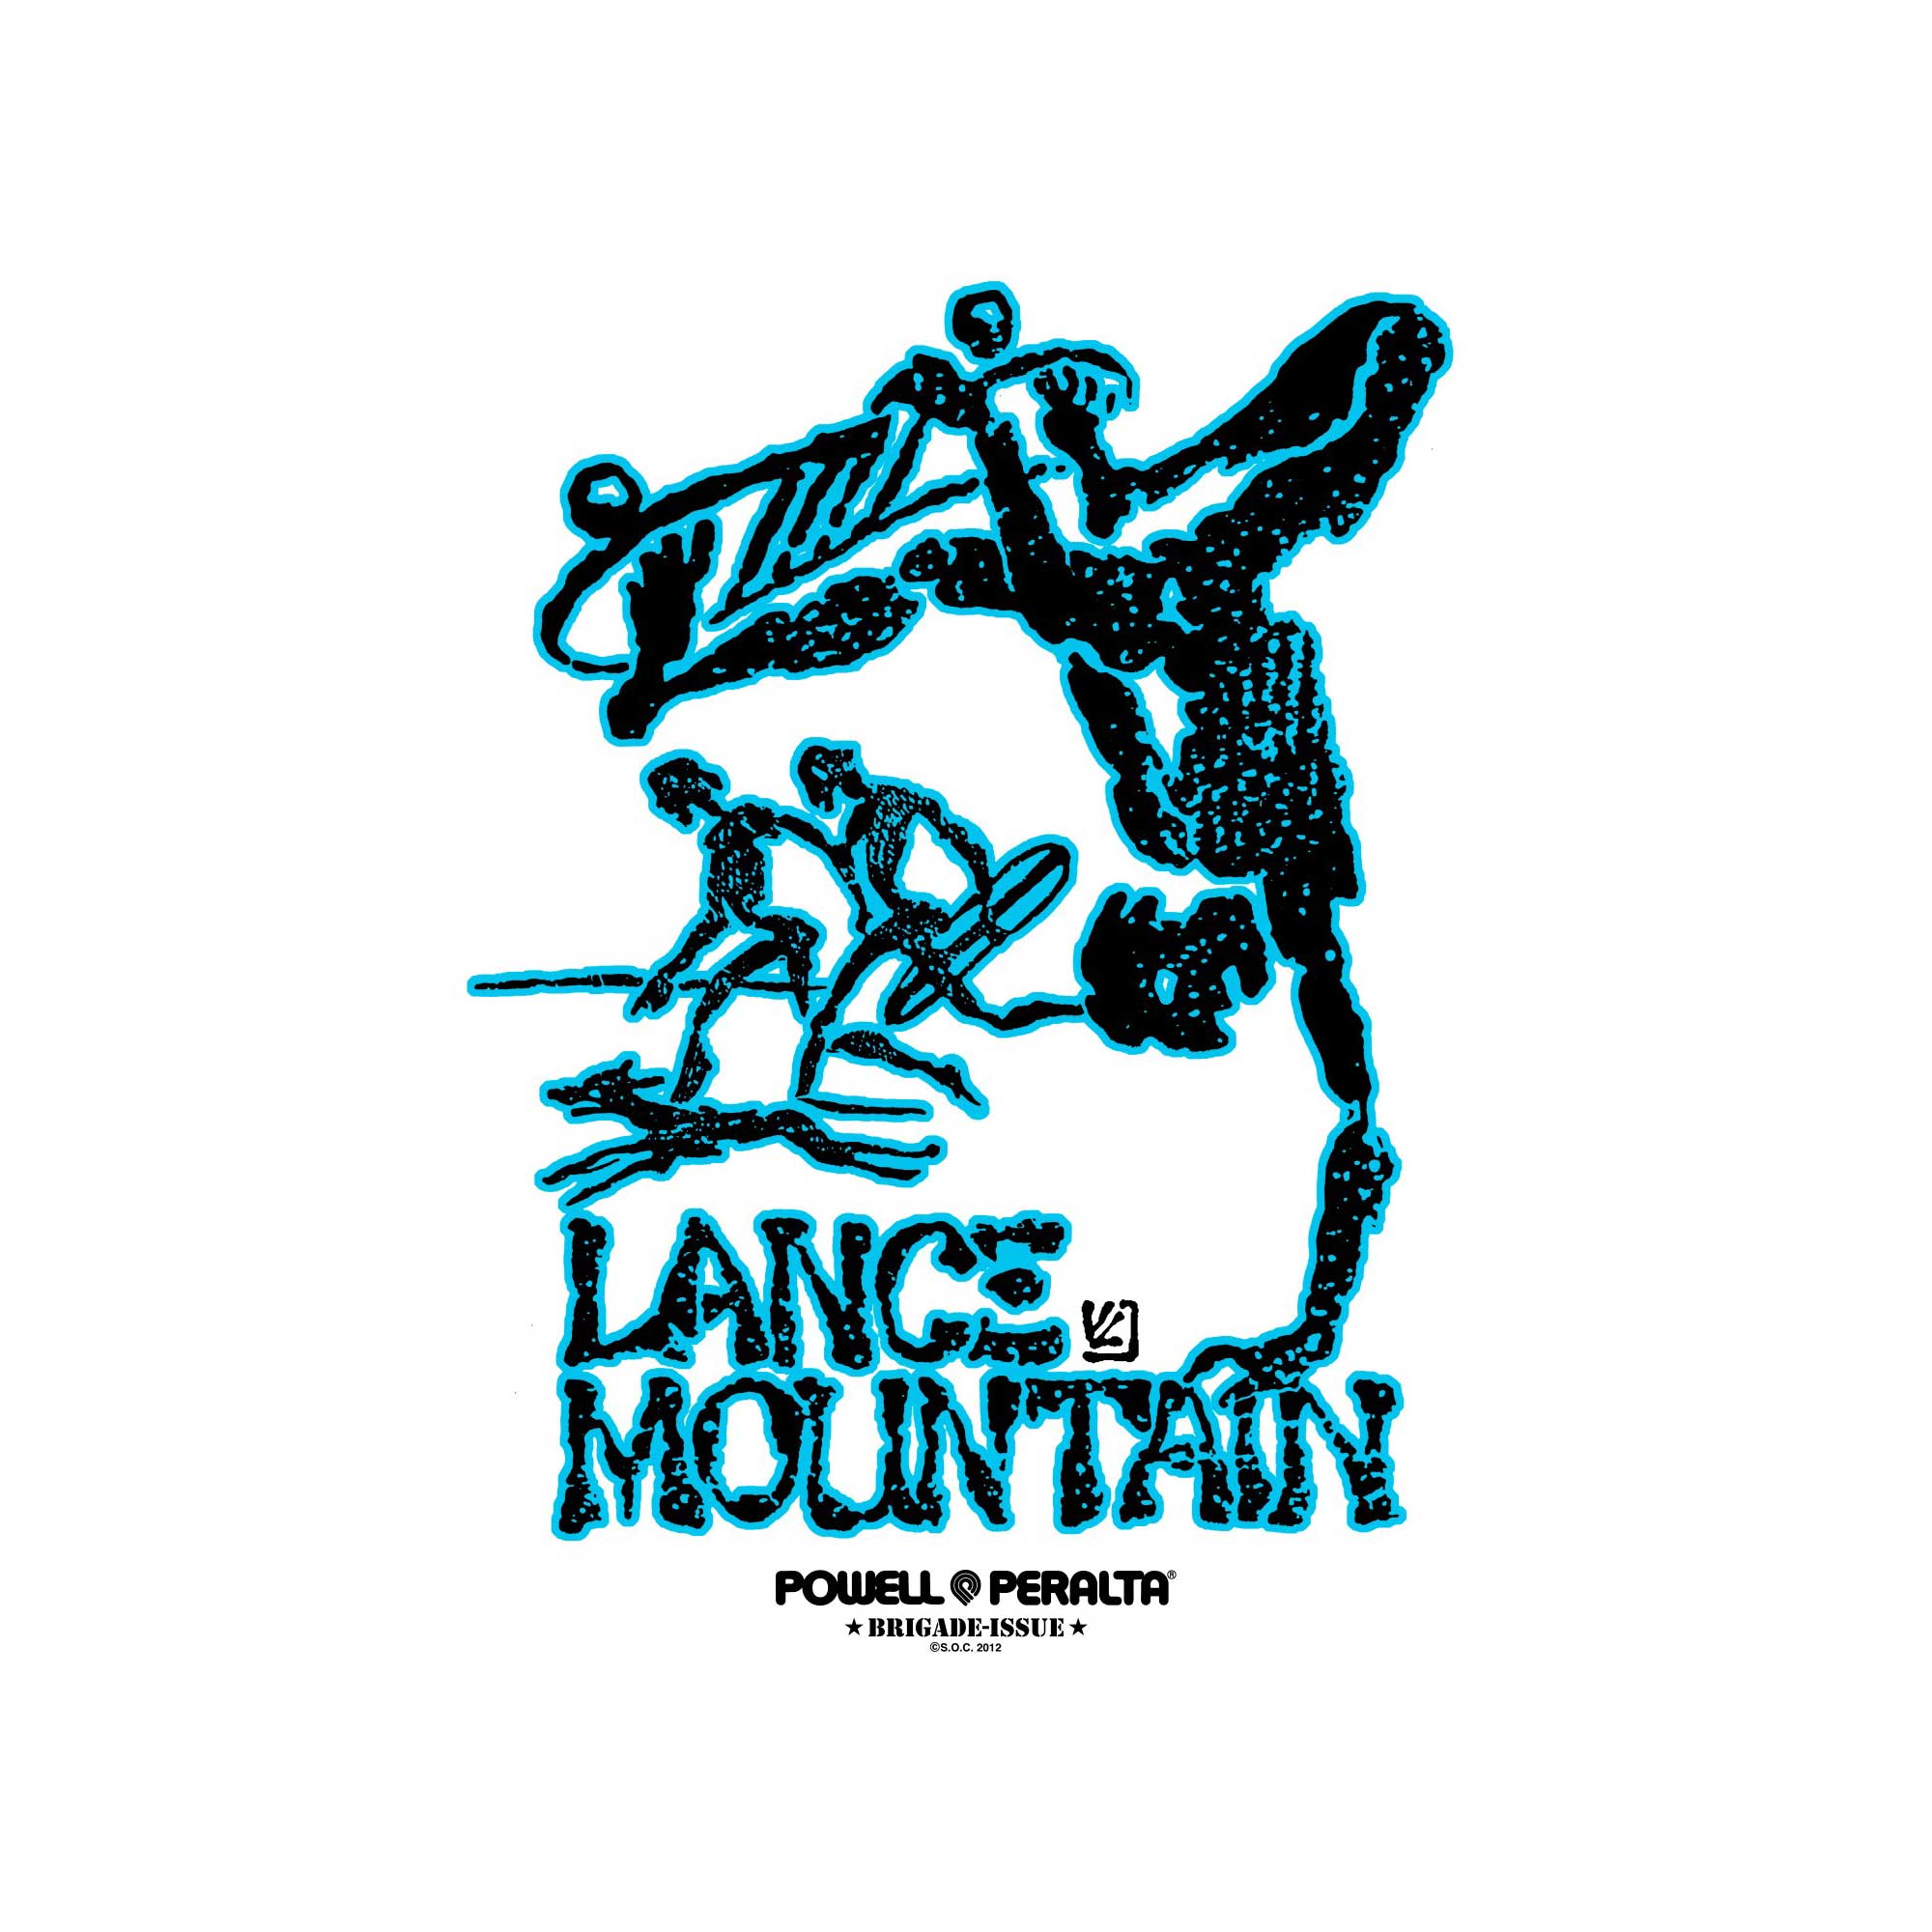 Powell Peralta Lance Mountain Future Primitive sticker